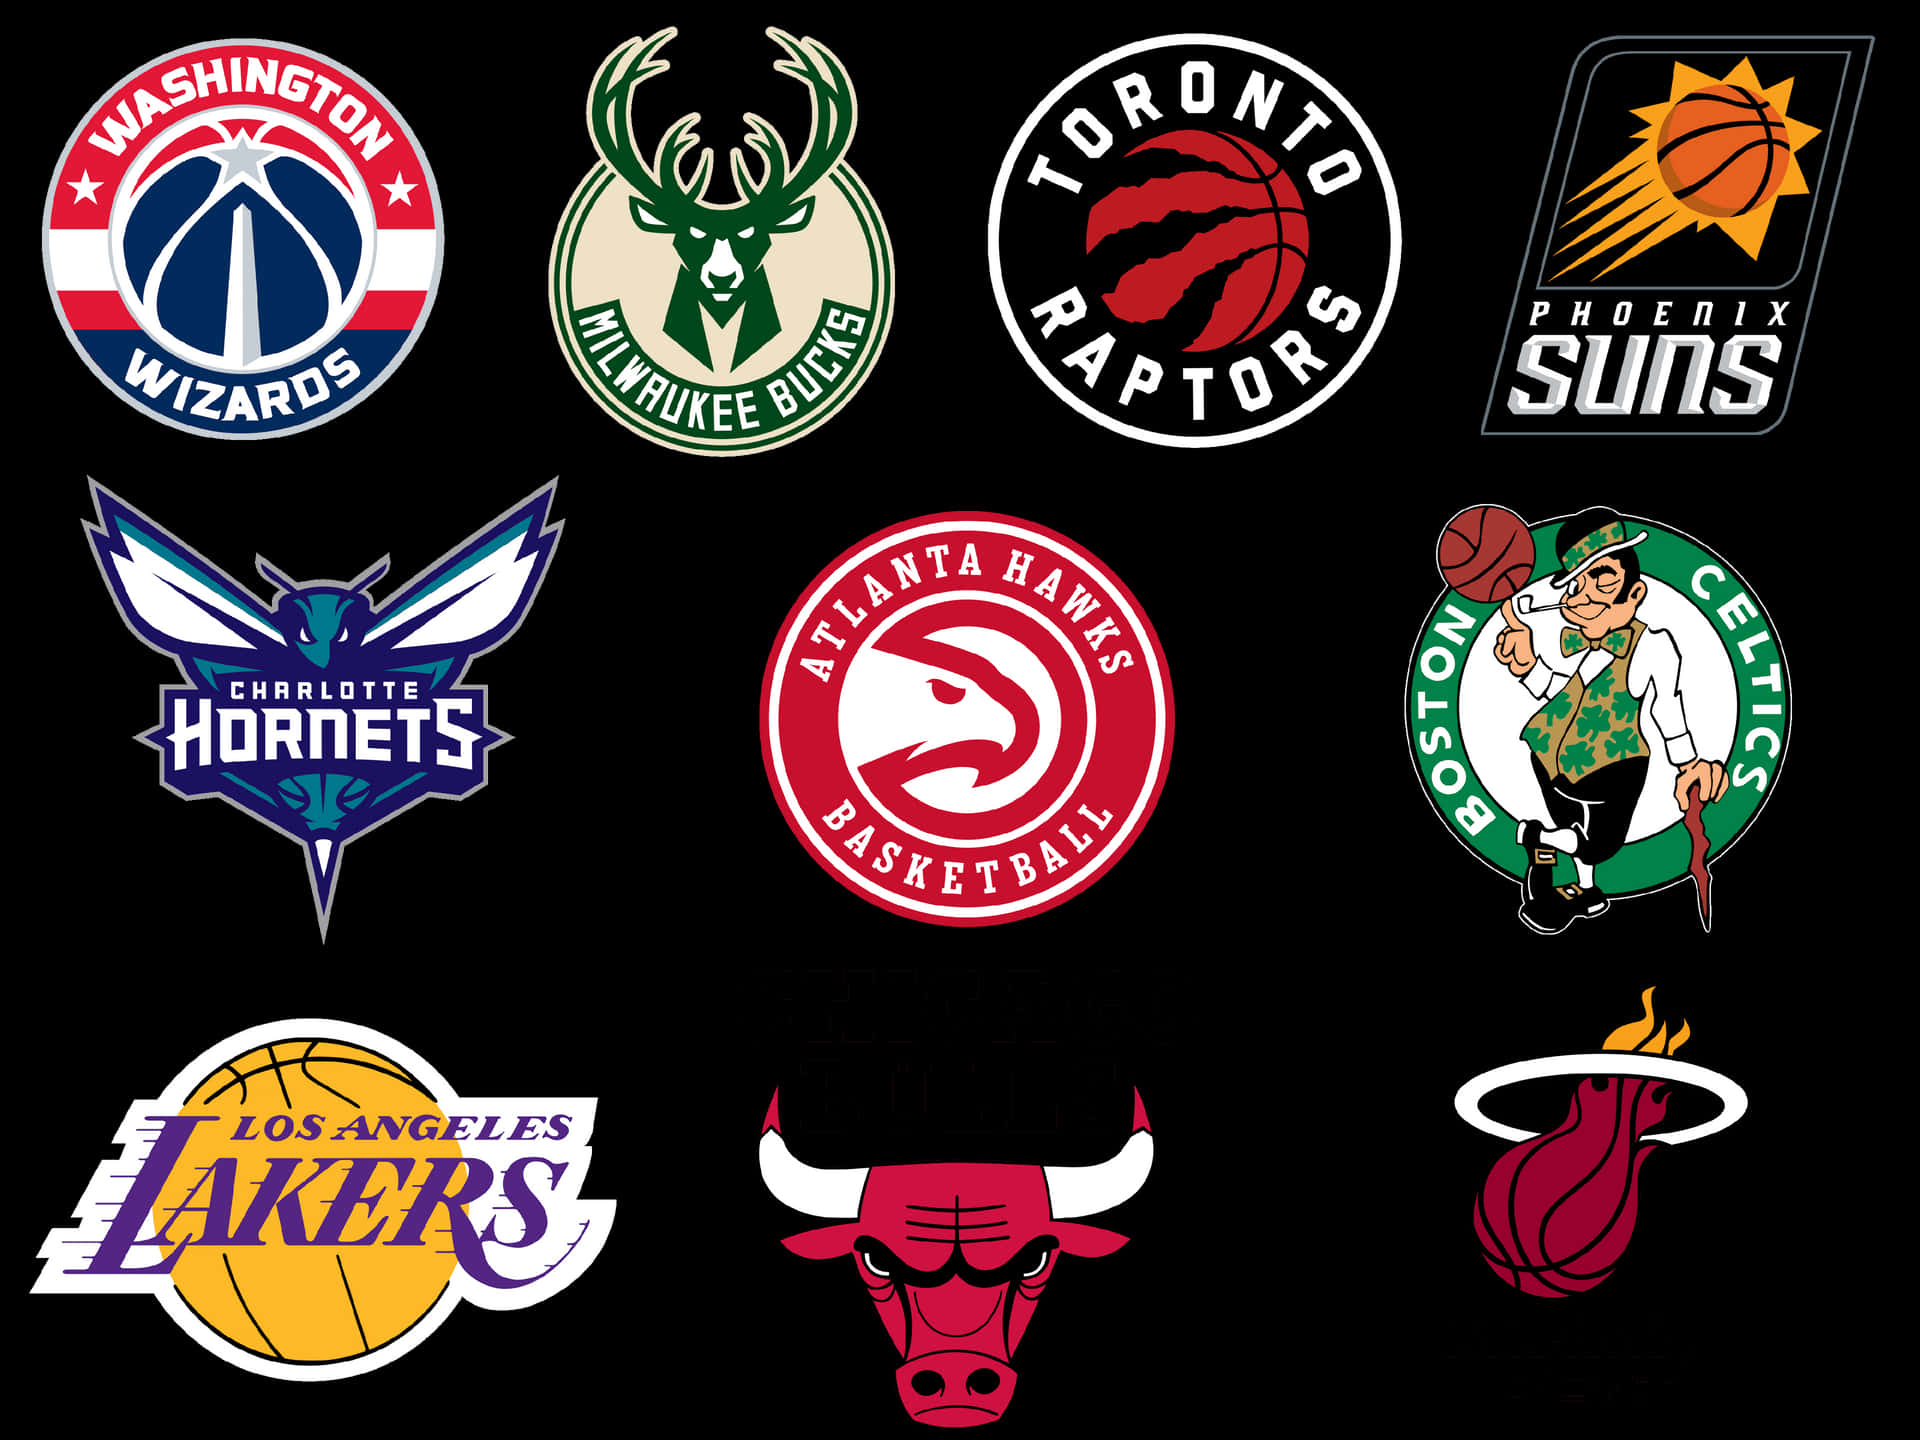 NBA Team Logos Wallpaper 2018 71 images